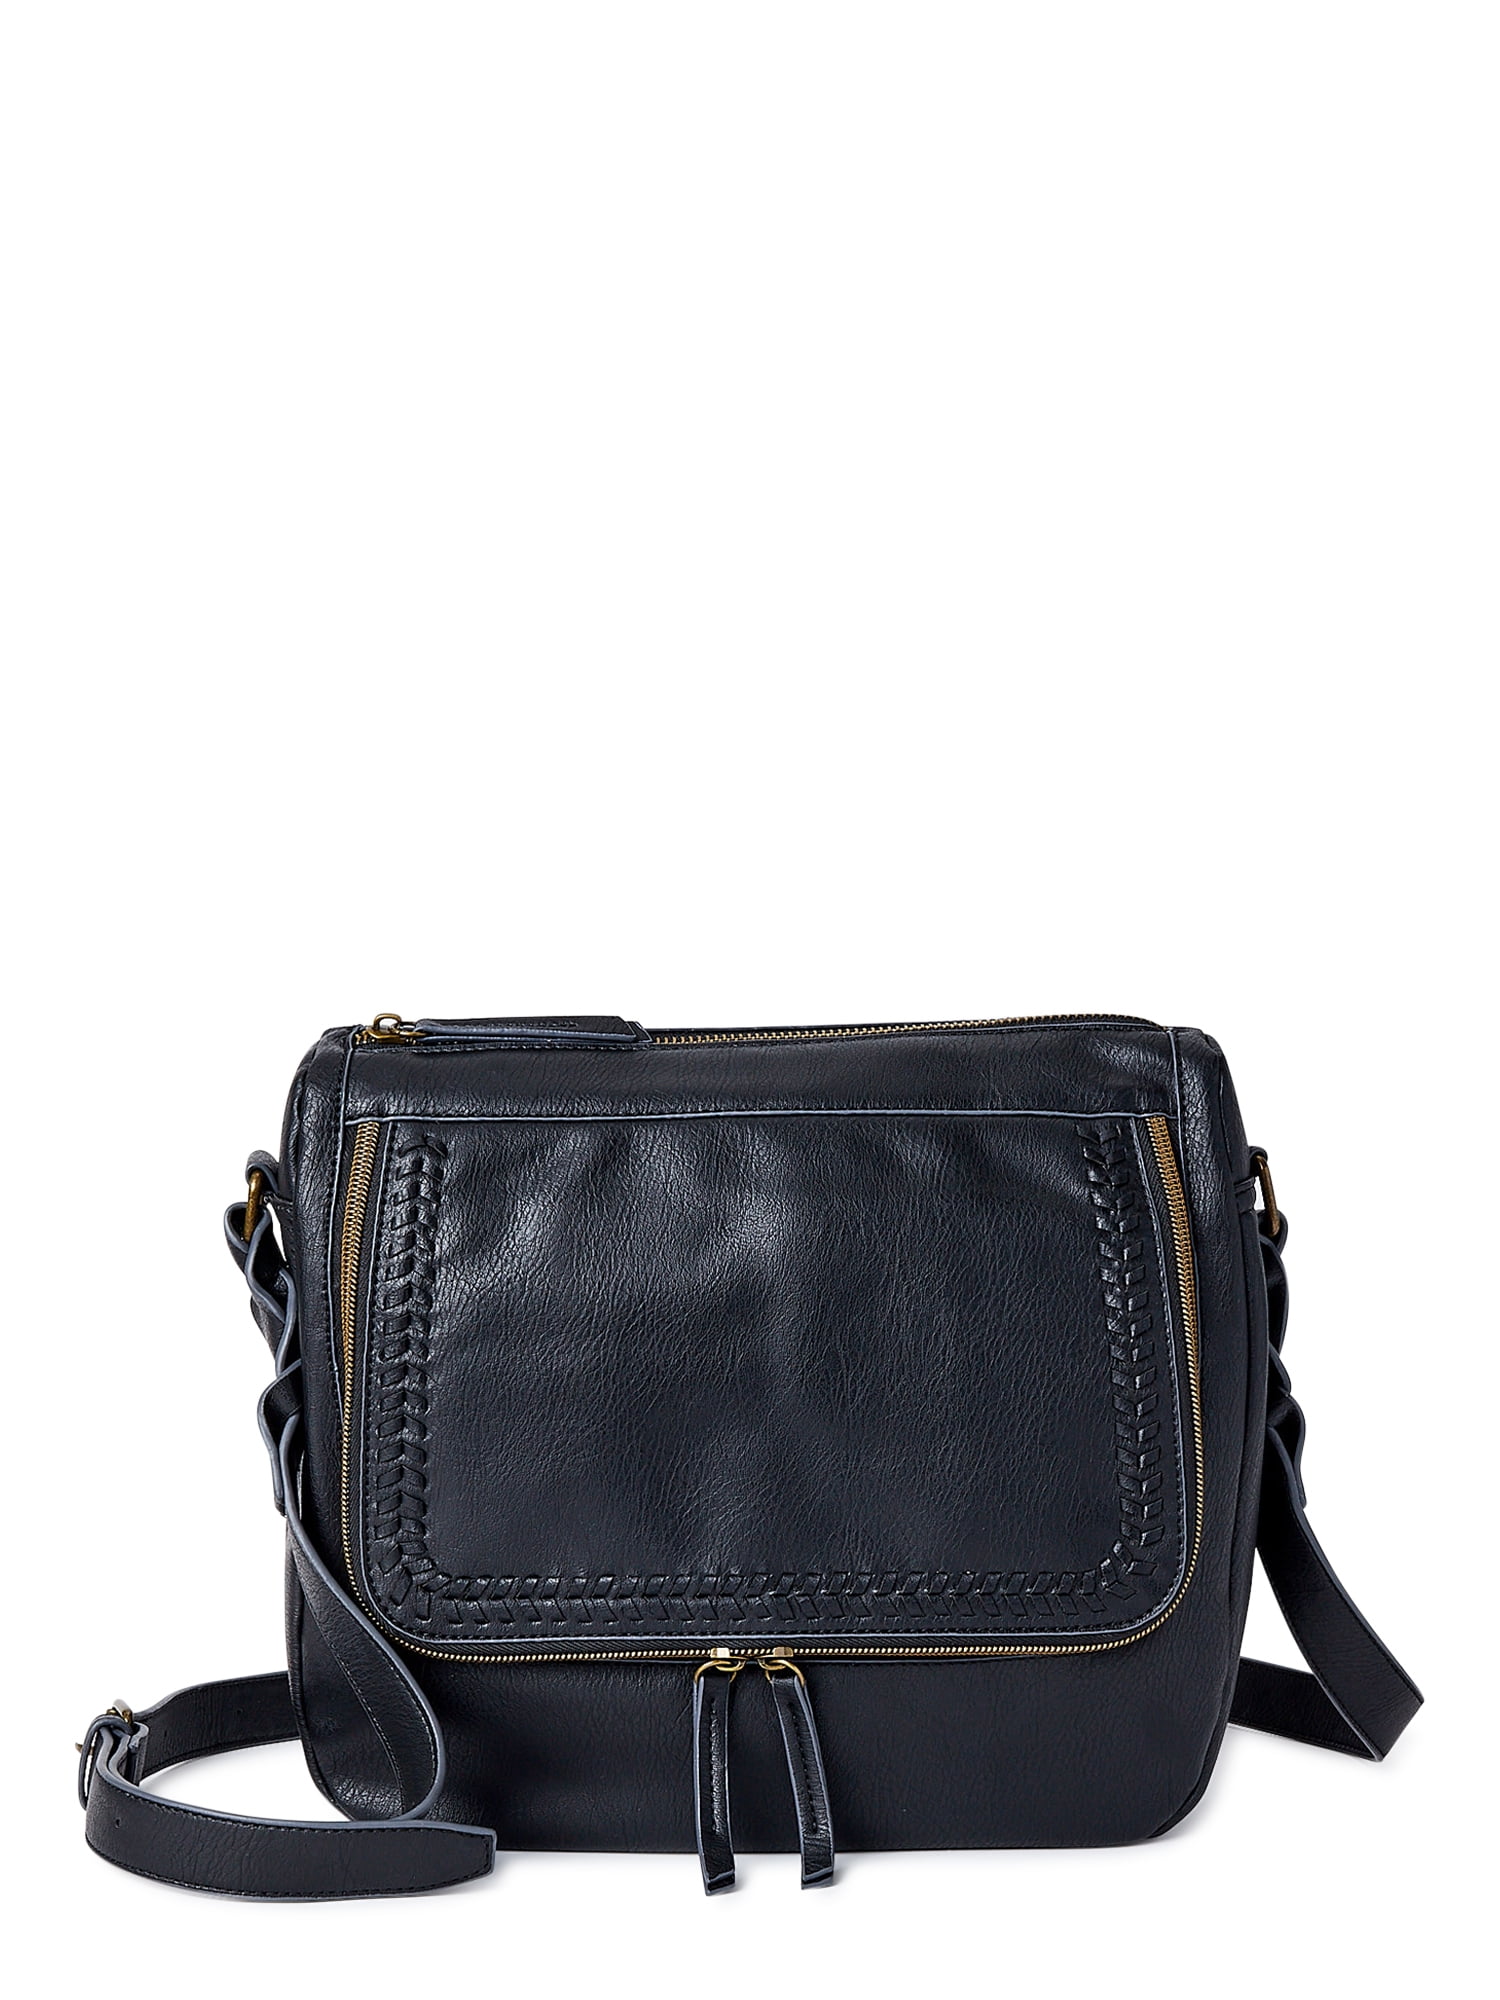 Time and Tru Women's Isla Faux Leather Crossbody Handbag Black